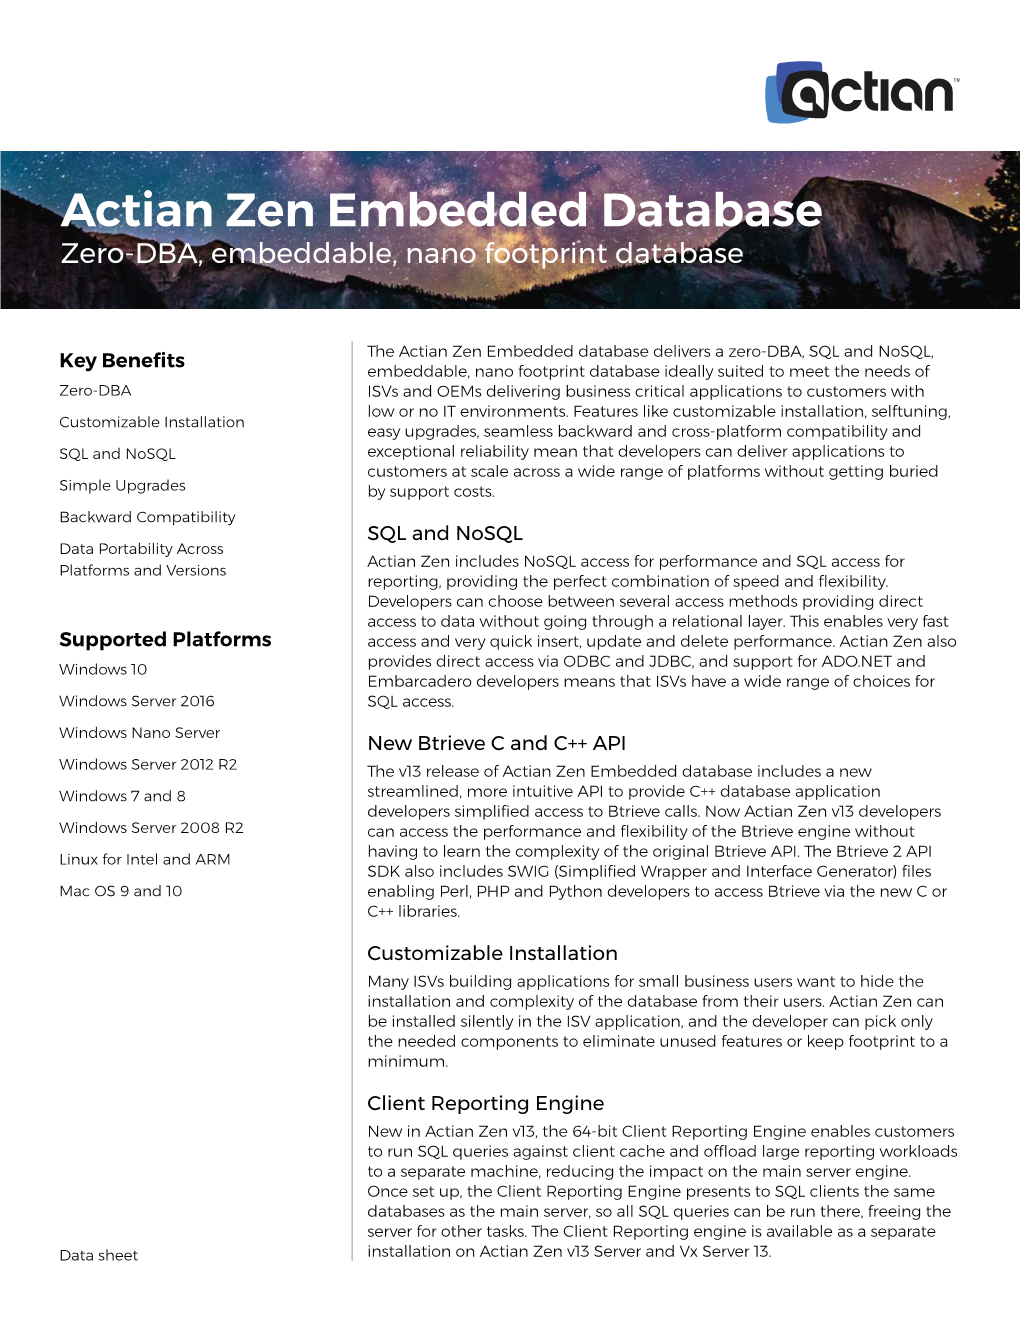 Actian Zen Embedded Database Zero-DBA, Embeddable, Nano Footprint Database